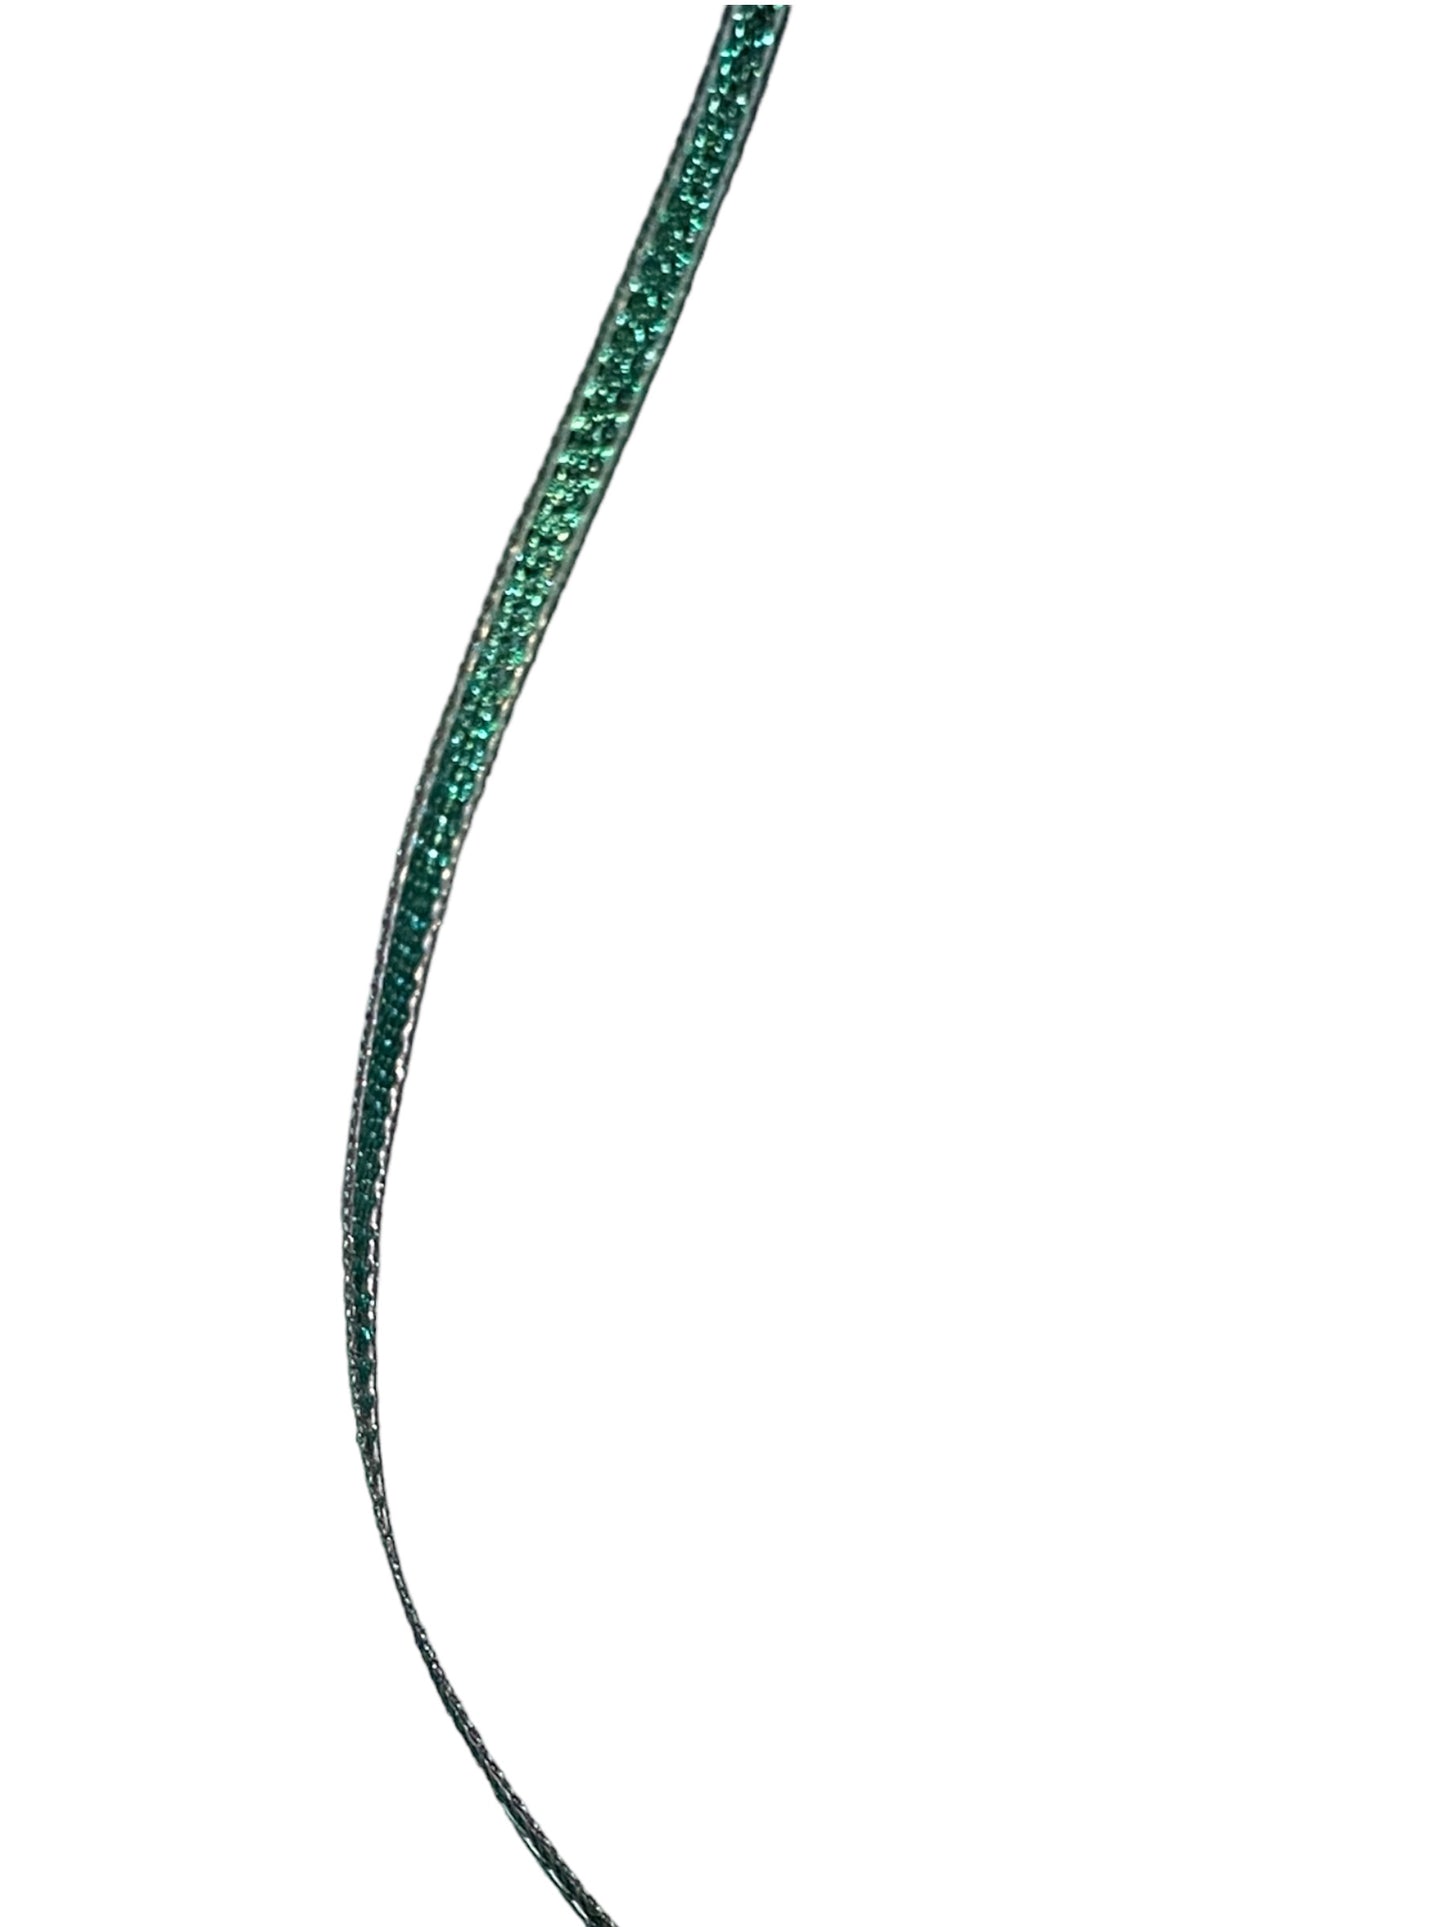 Tiffany bånd nydelig satinbånd med flott metallic/glanset farge 3mm